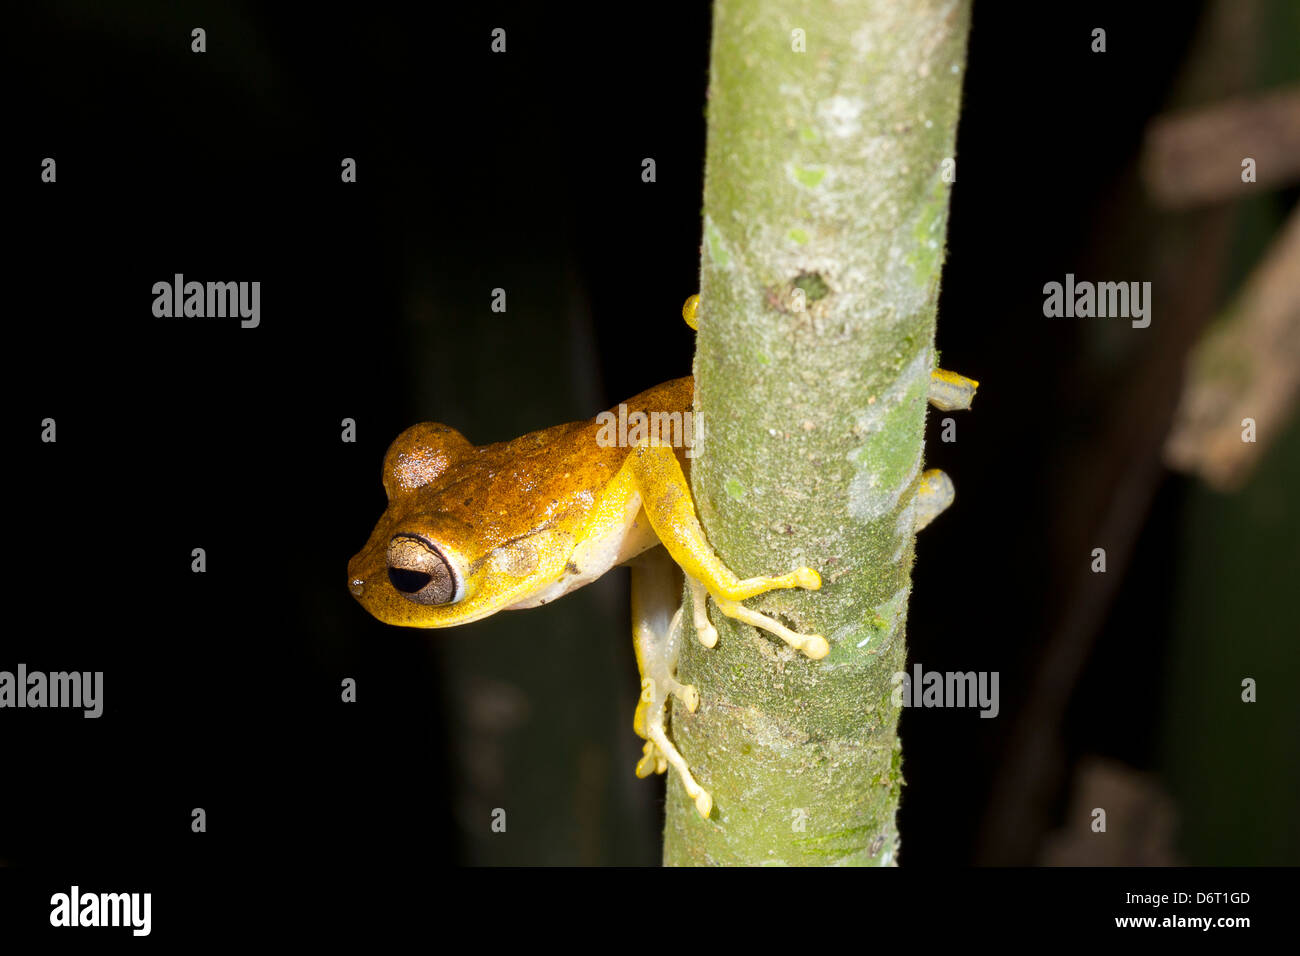 Gunther's Banded Treefrog (Hypsiboas fasciatus), Ecuador Stock Photo